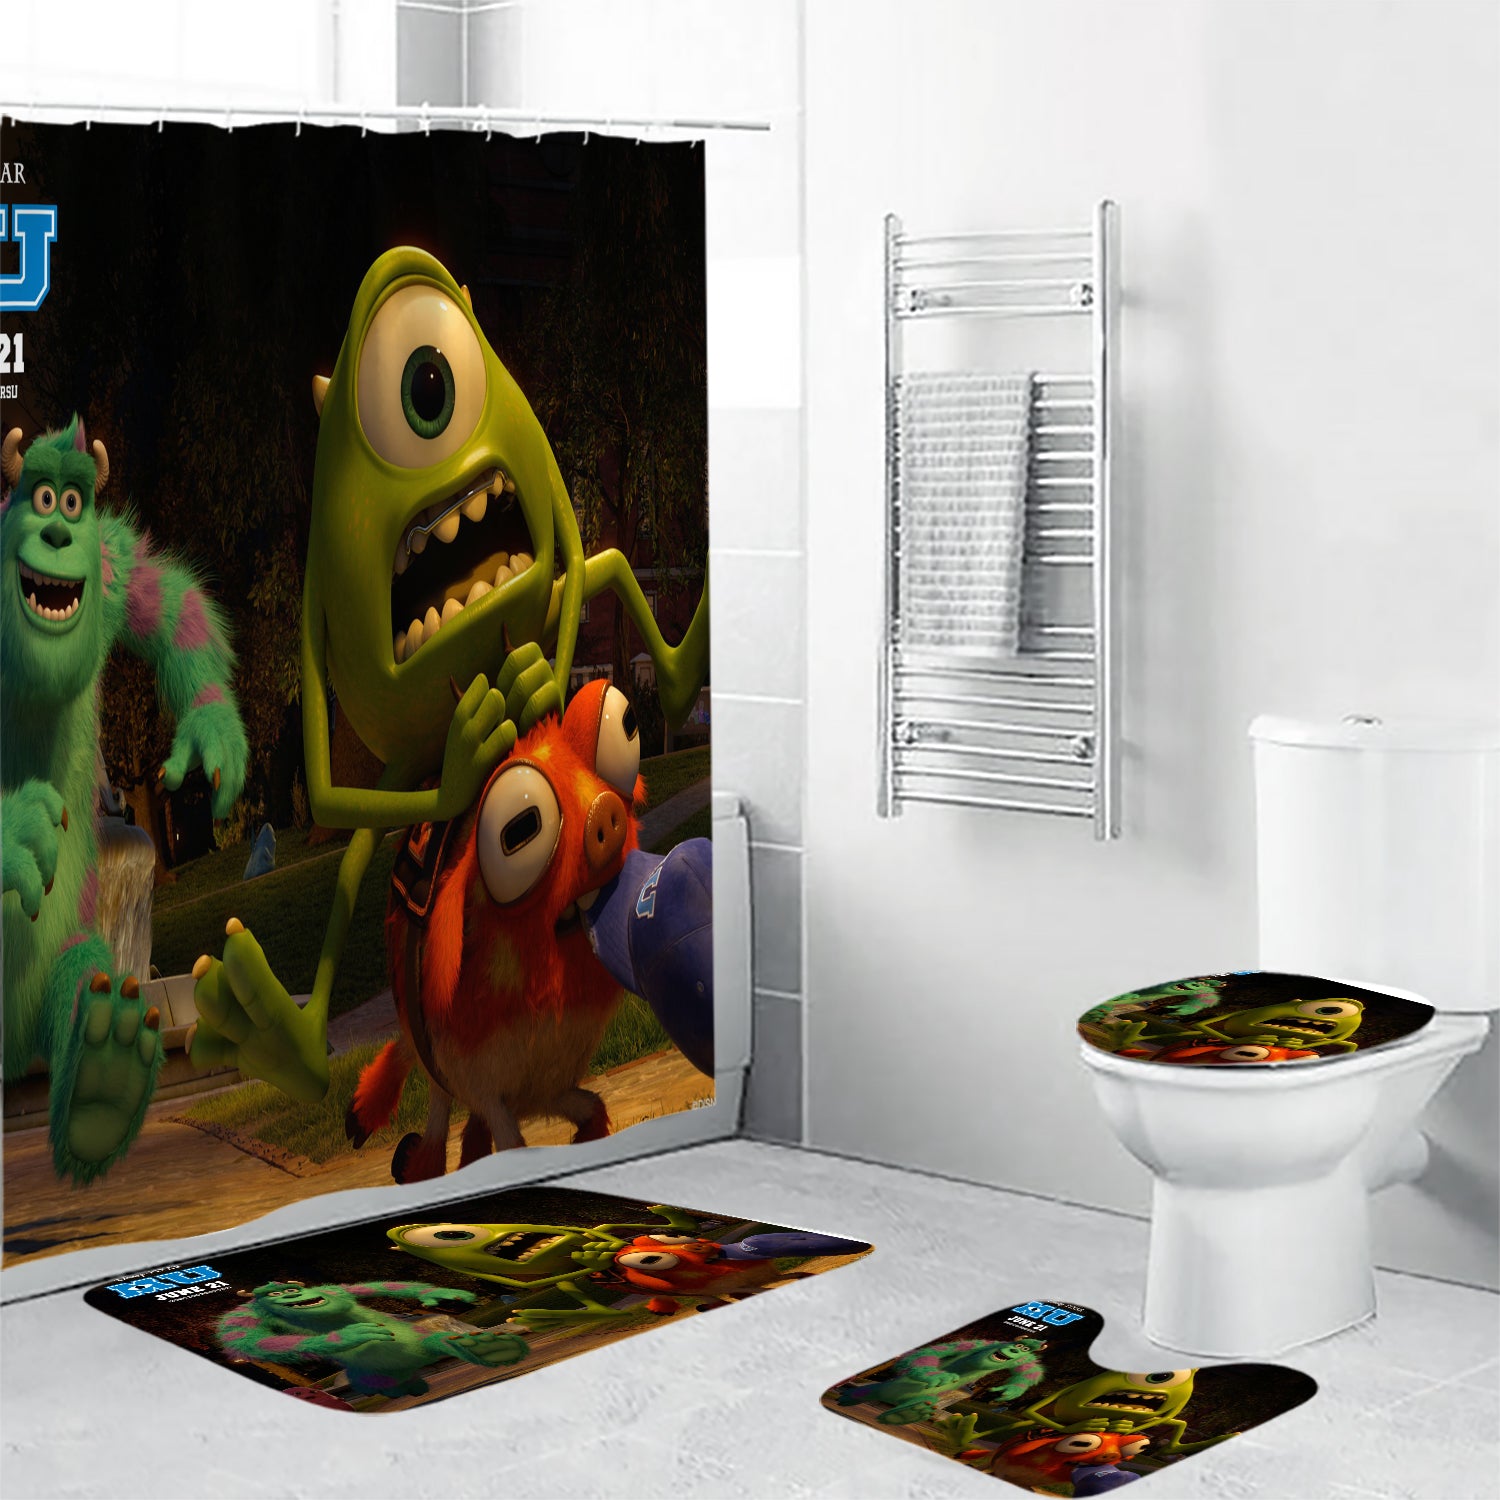 Characters v15 Monsters Inc Monsters University Movie Disney Pixar Waterproof Shower Curtain Non-Slip Toilet Lid Cover Bath Mat - Bathroom Set